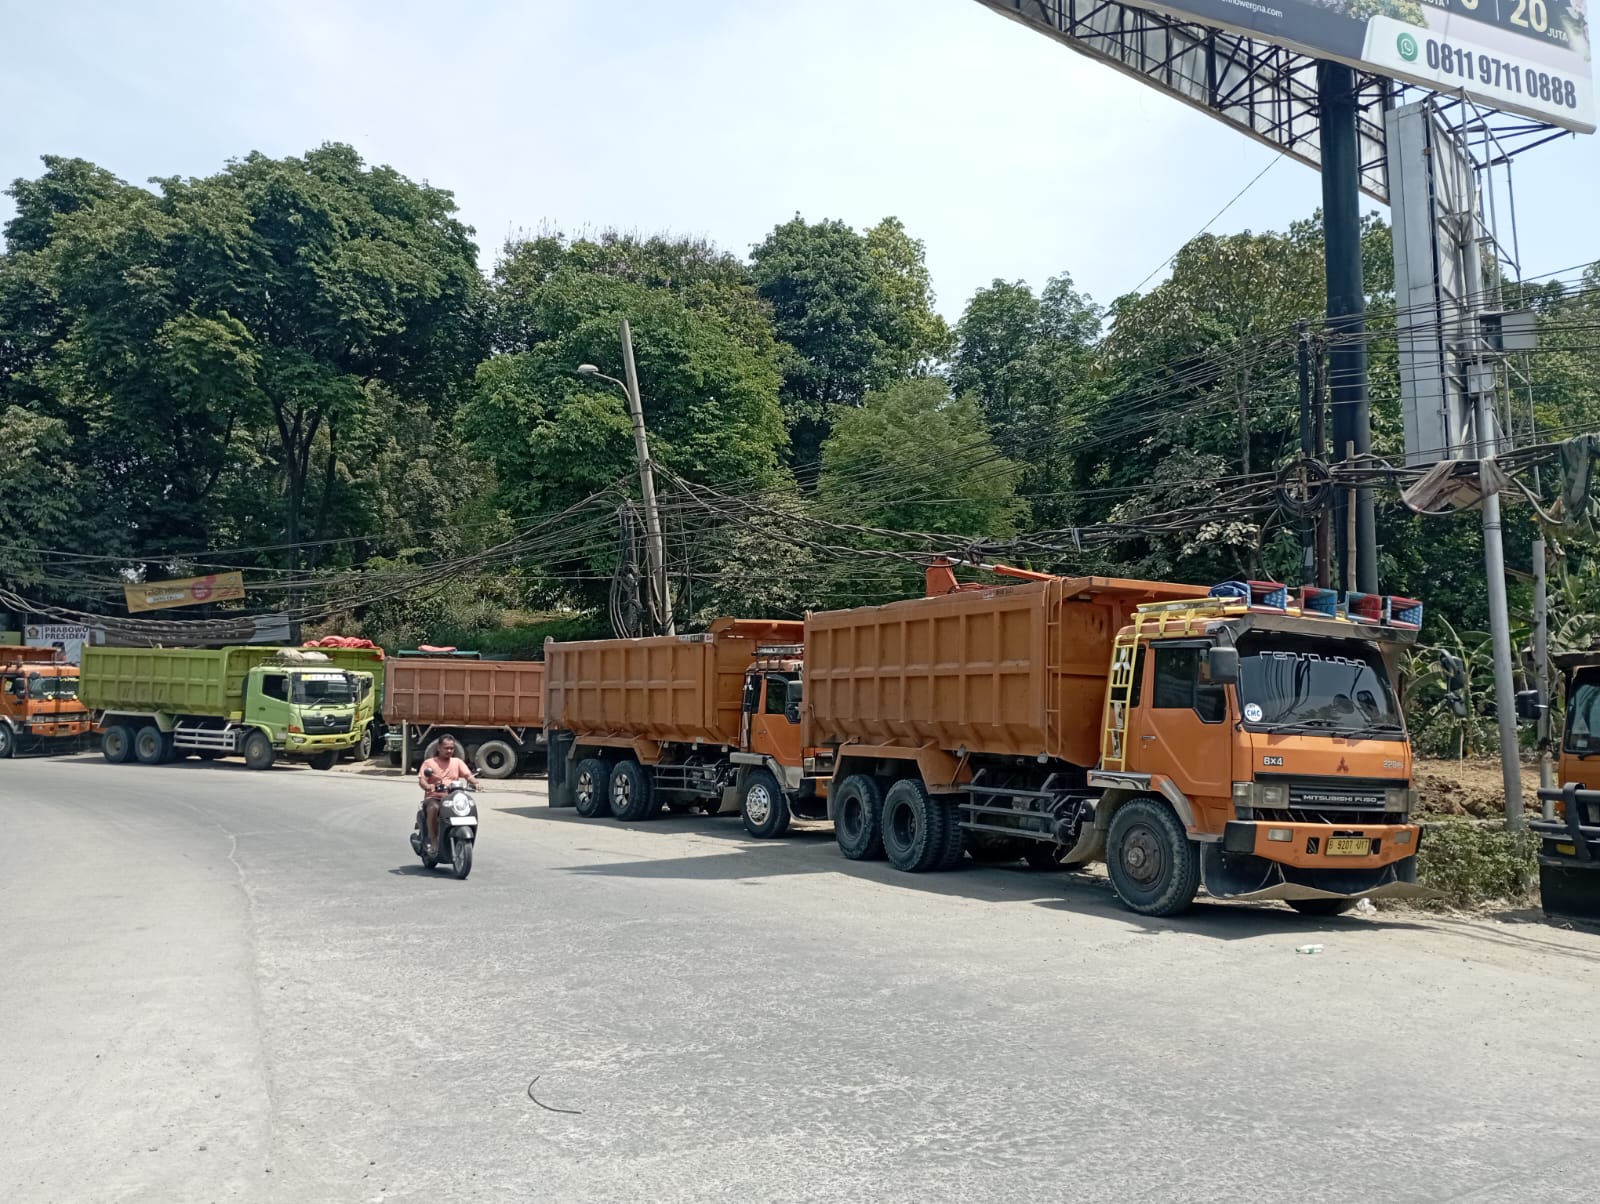 Truk tambang saat parkir di area kantong parkir milik warga Parung Panjang, Kabupaten Bogor.